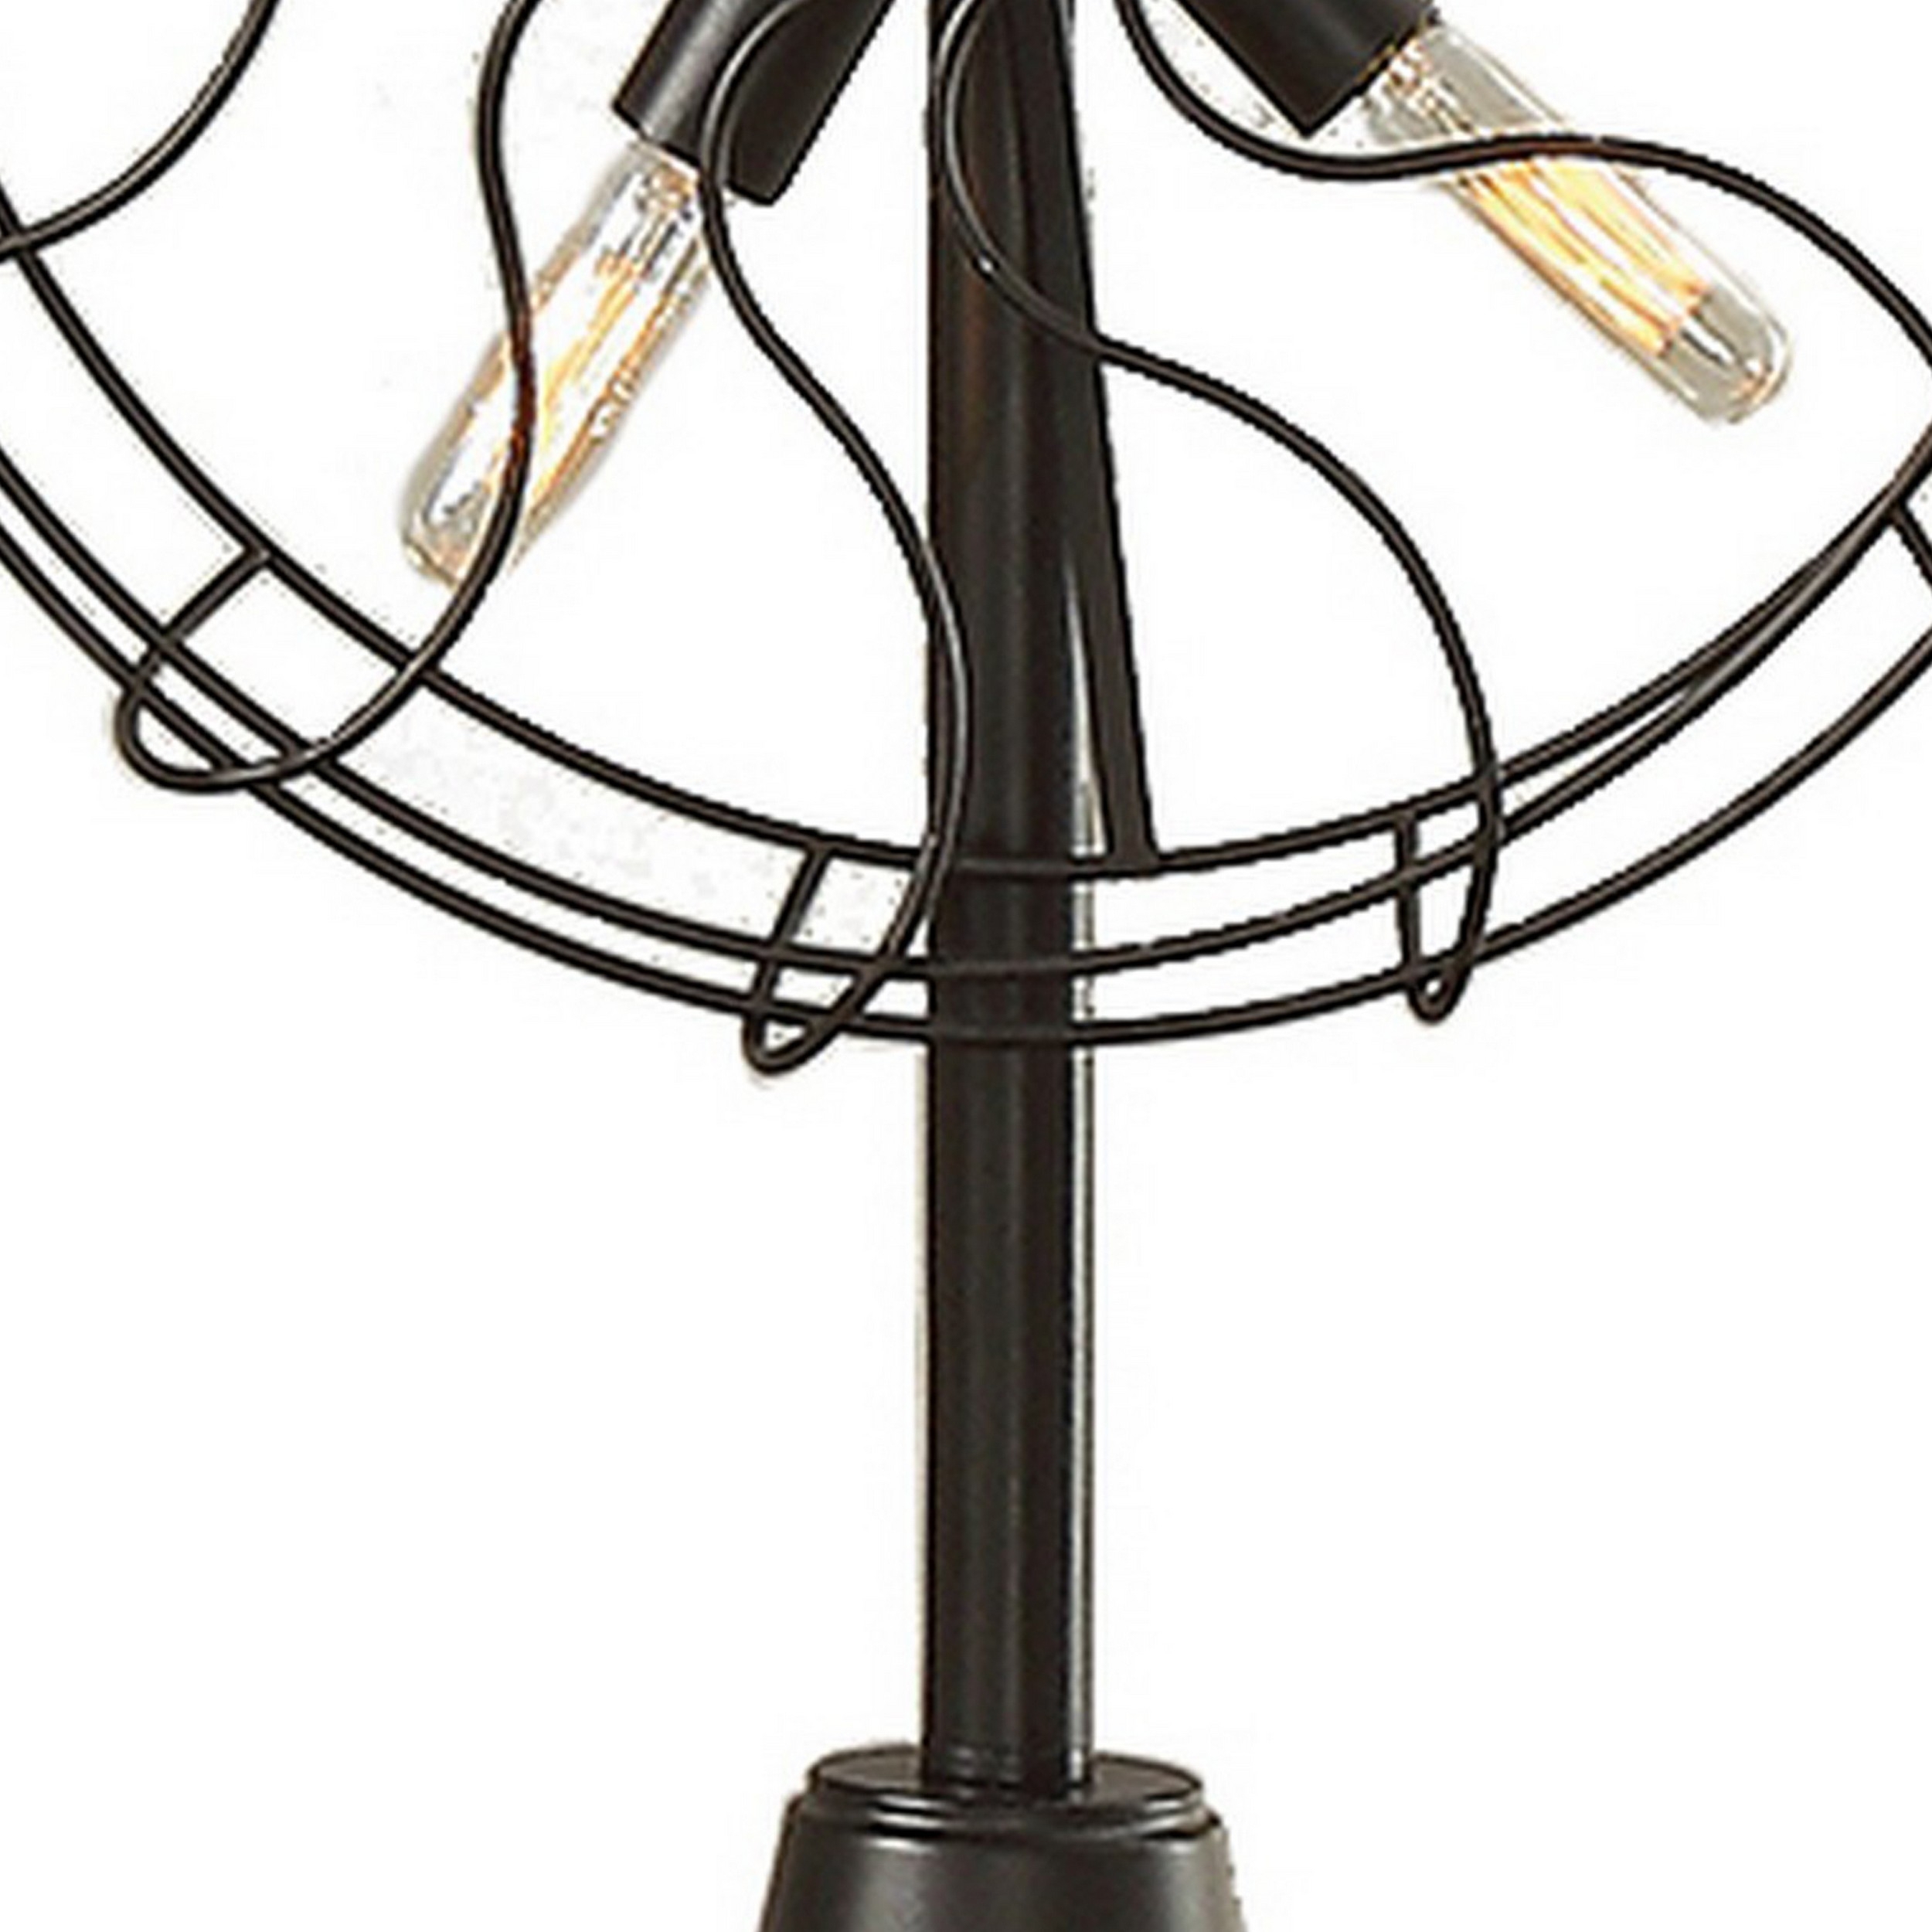 Quinn 26 Inch Accent Table Lamp, Vintage Fan Design, Antique Bronze -Saltoro Sherpi